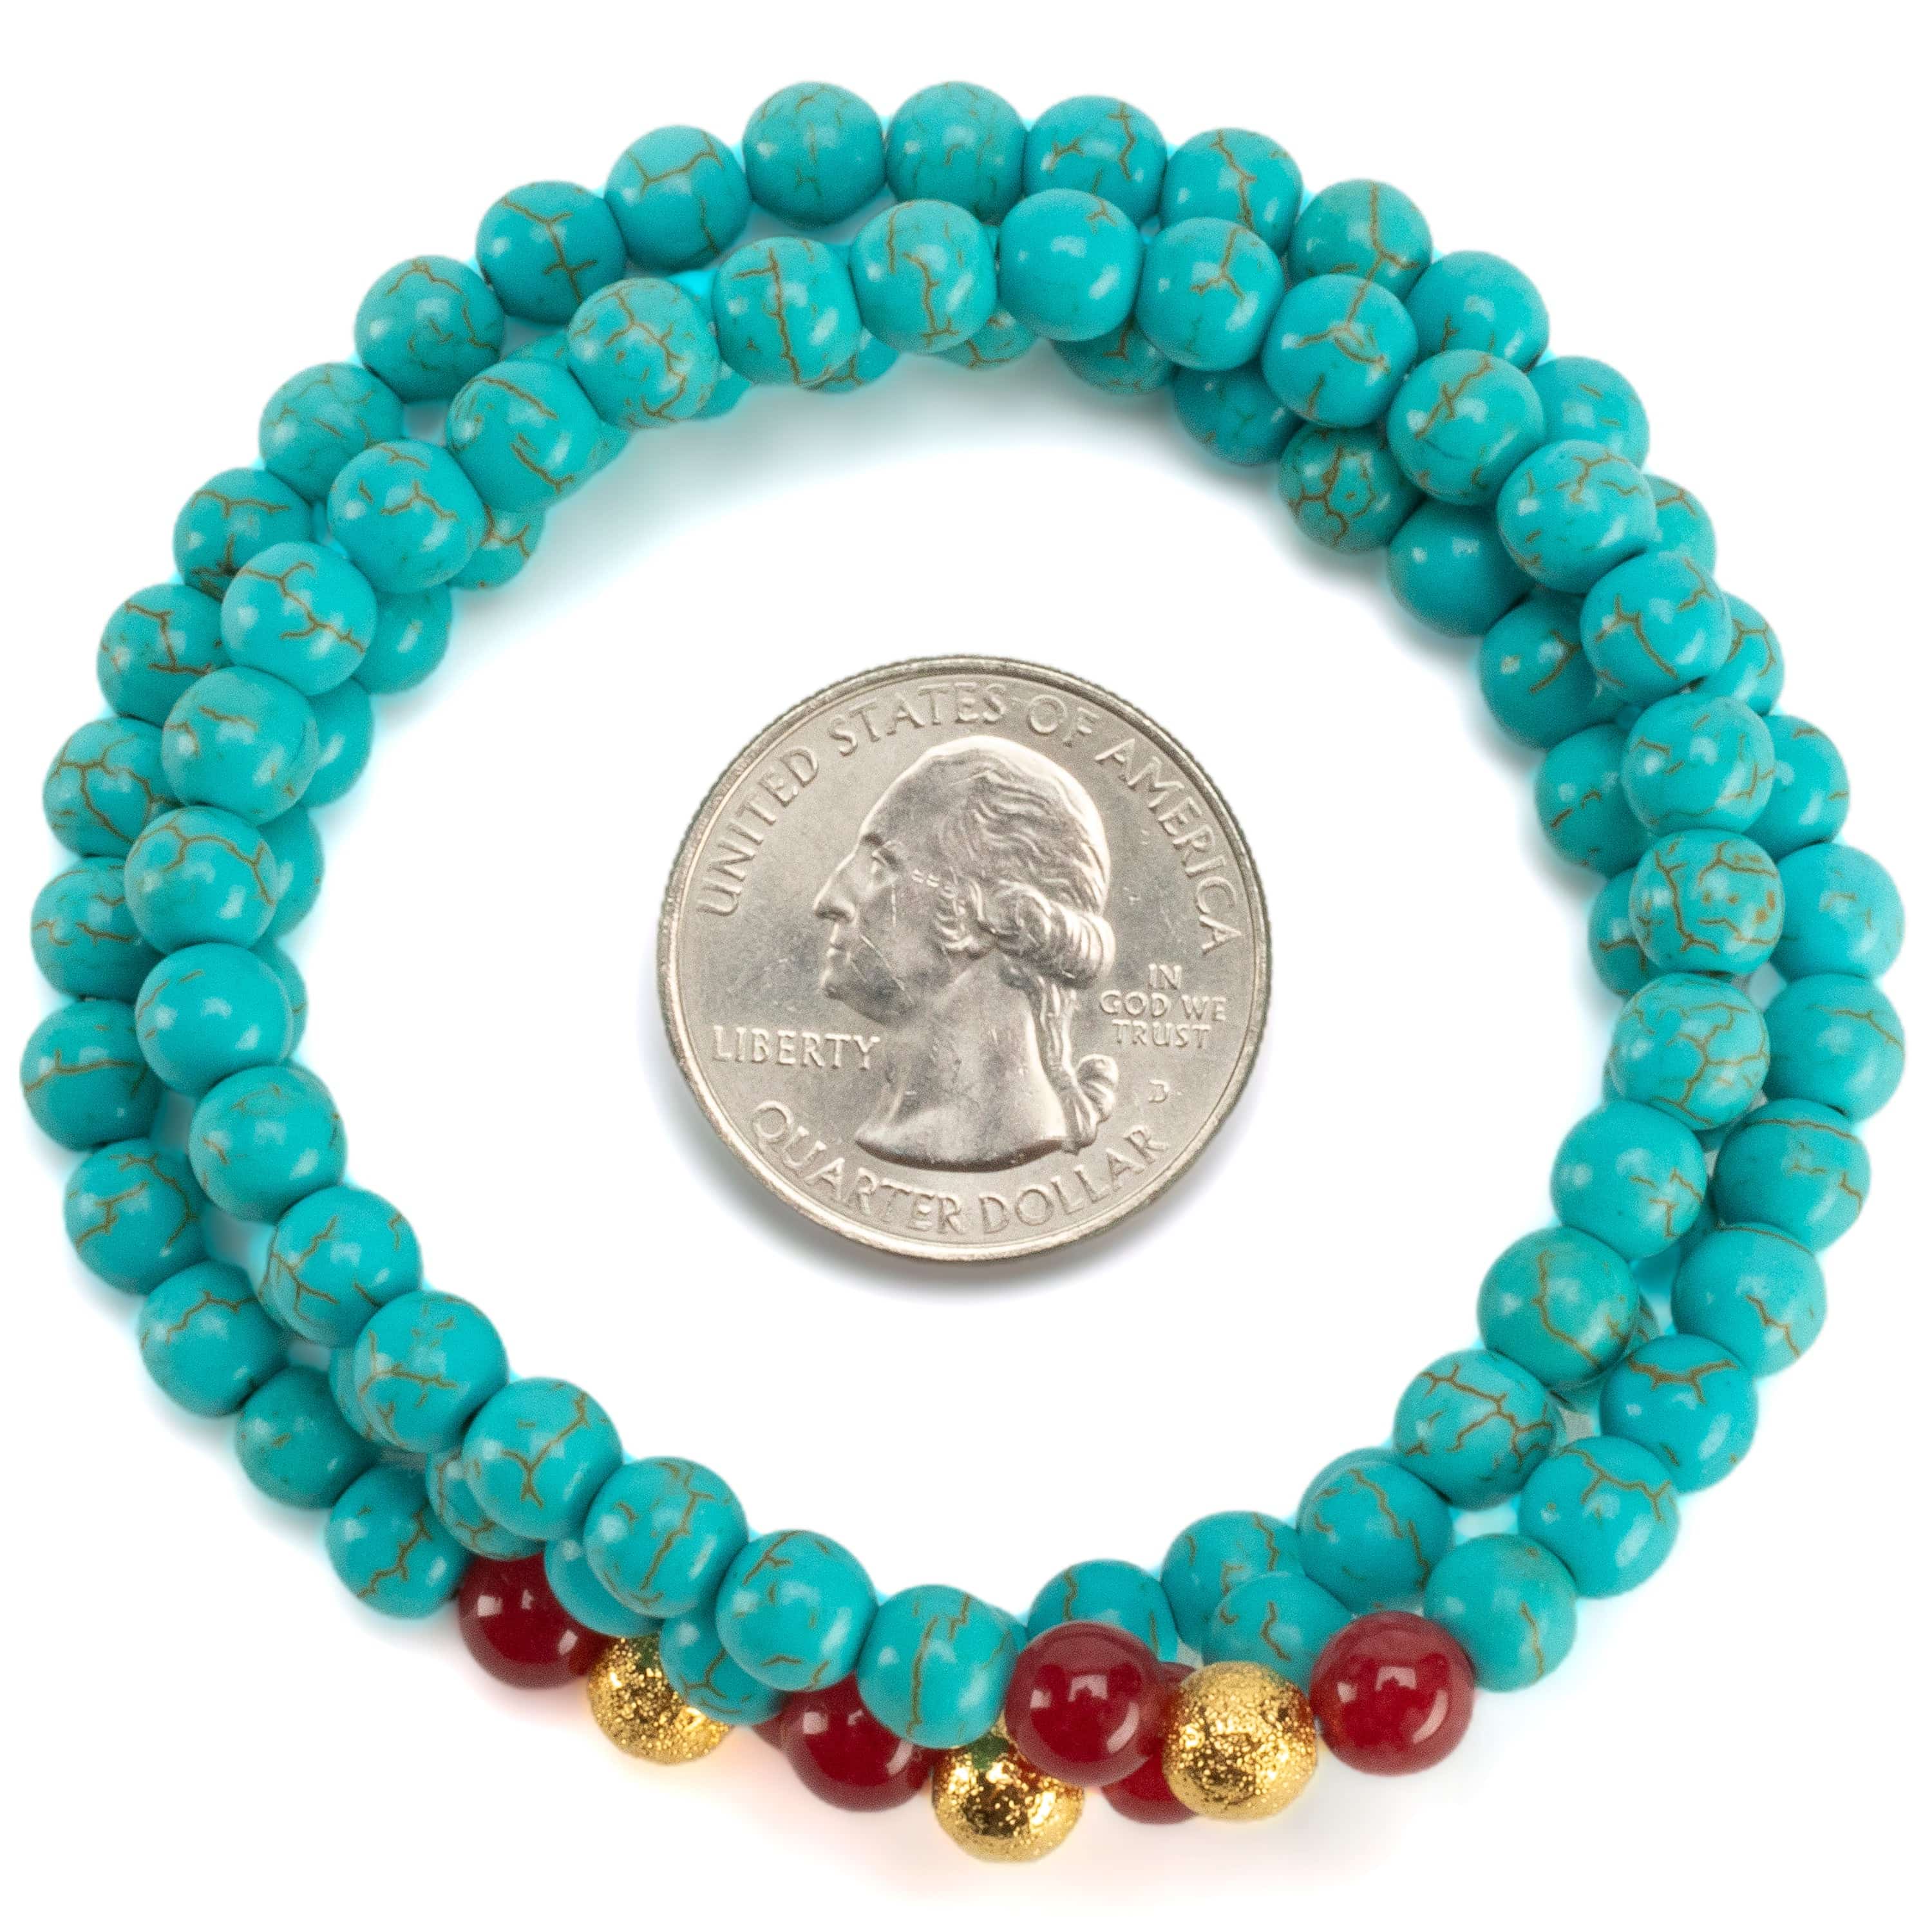 Kalifano Gemstone Bracelets Howlite Turquoise 6mm Beads with Red Agate & Gold Sparkly Accent Beads Triple Wrap Gemstone Elastic Bracelet WHITE-BGI3-087